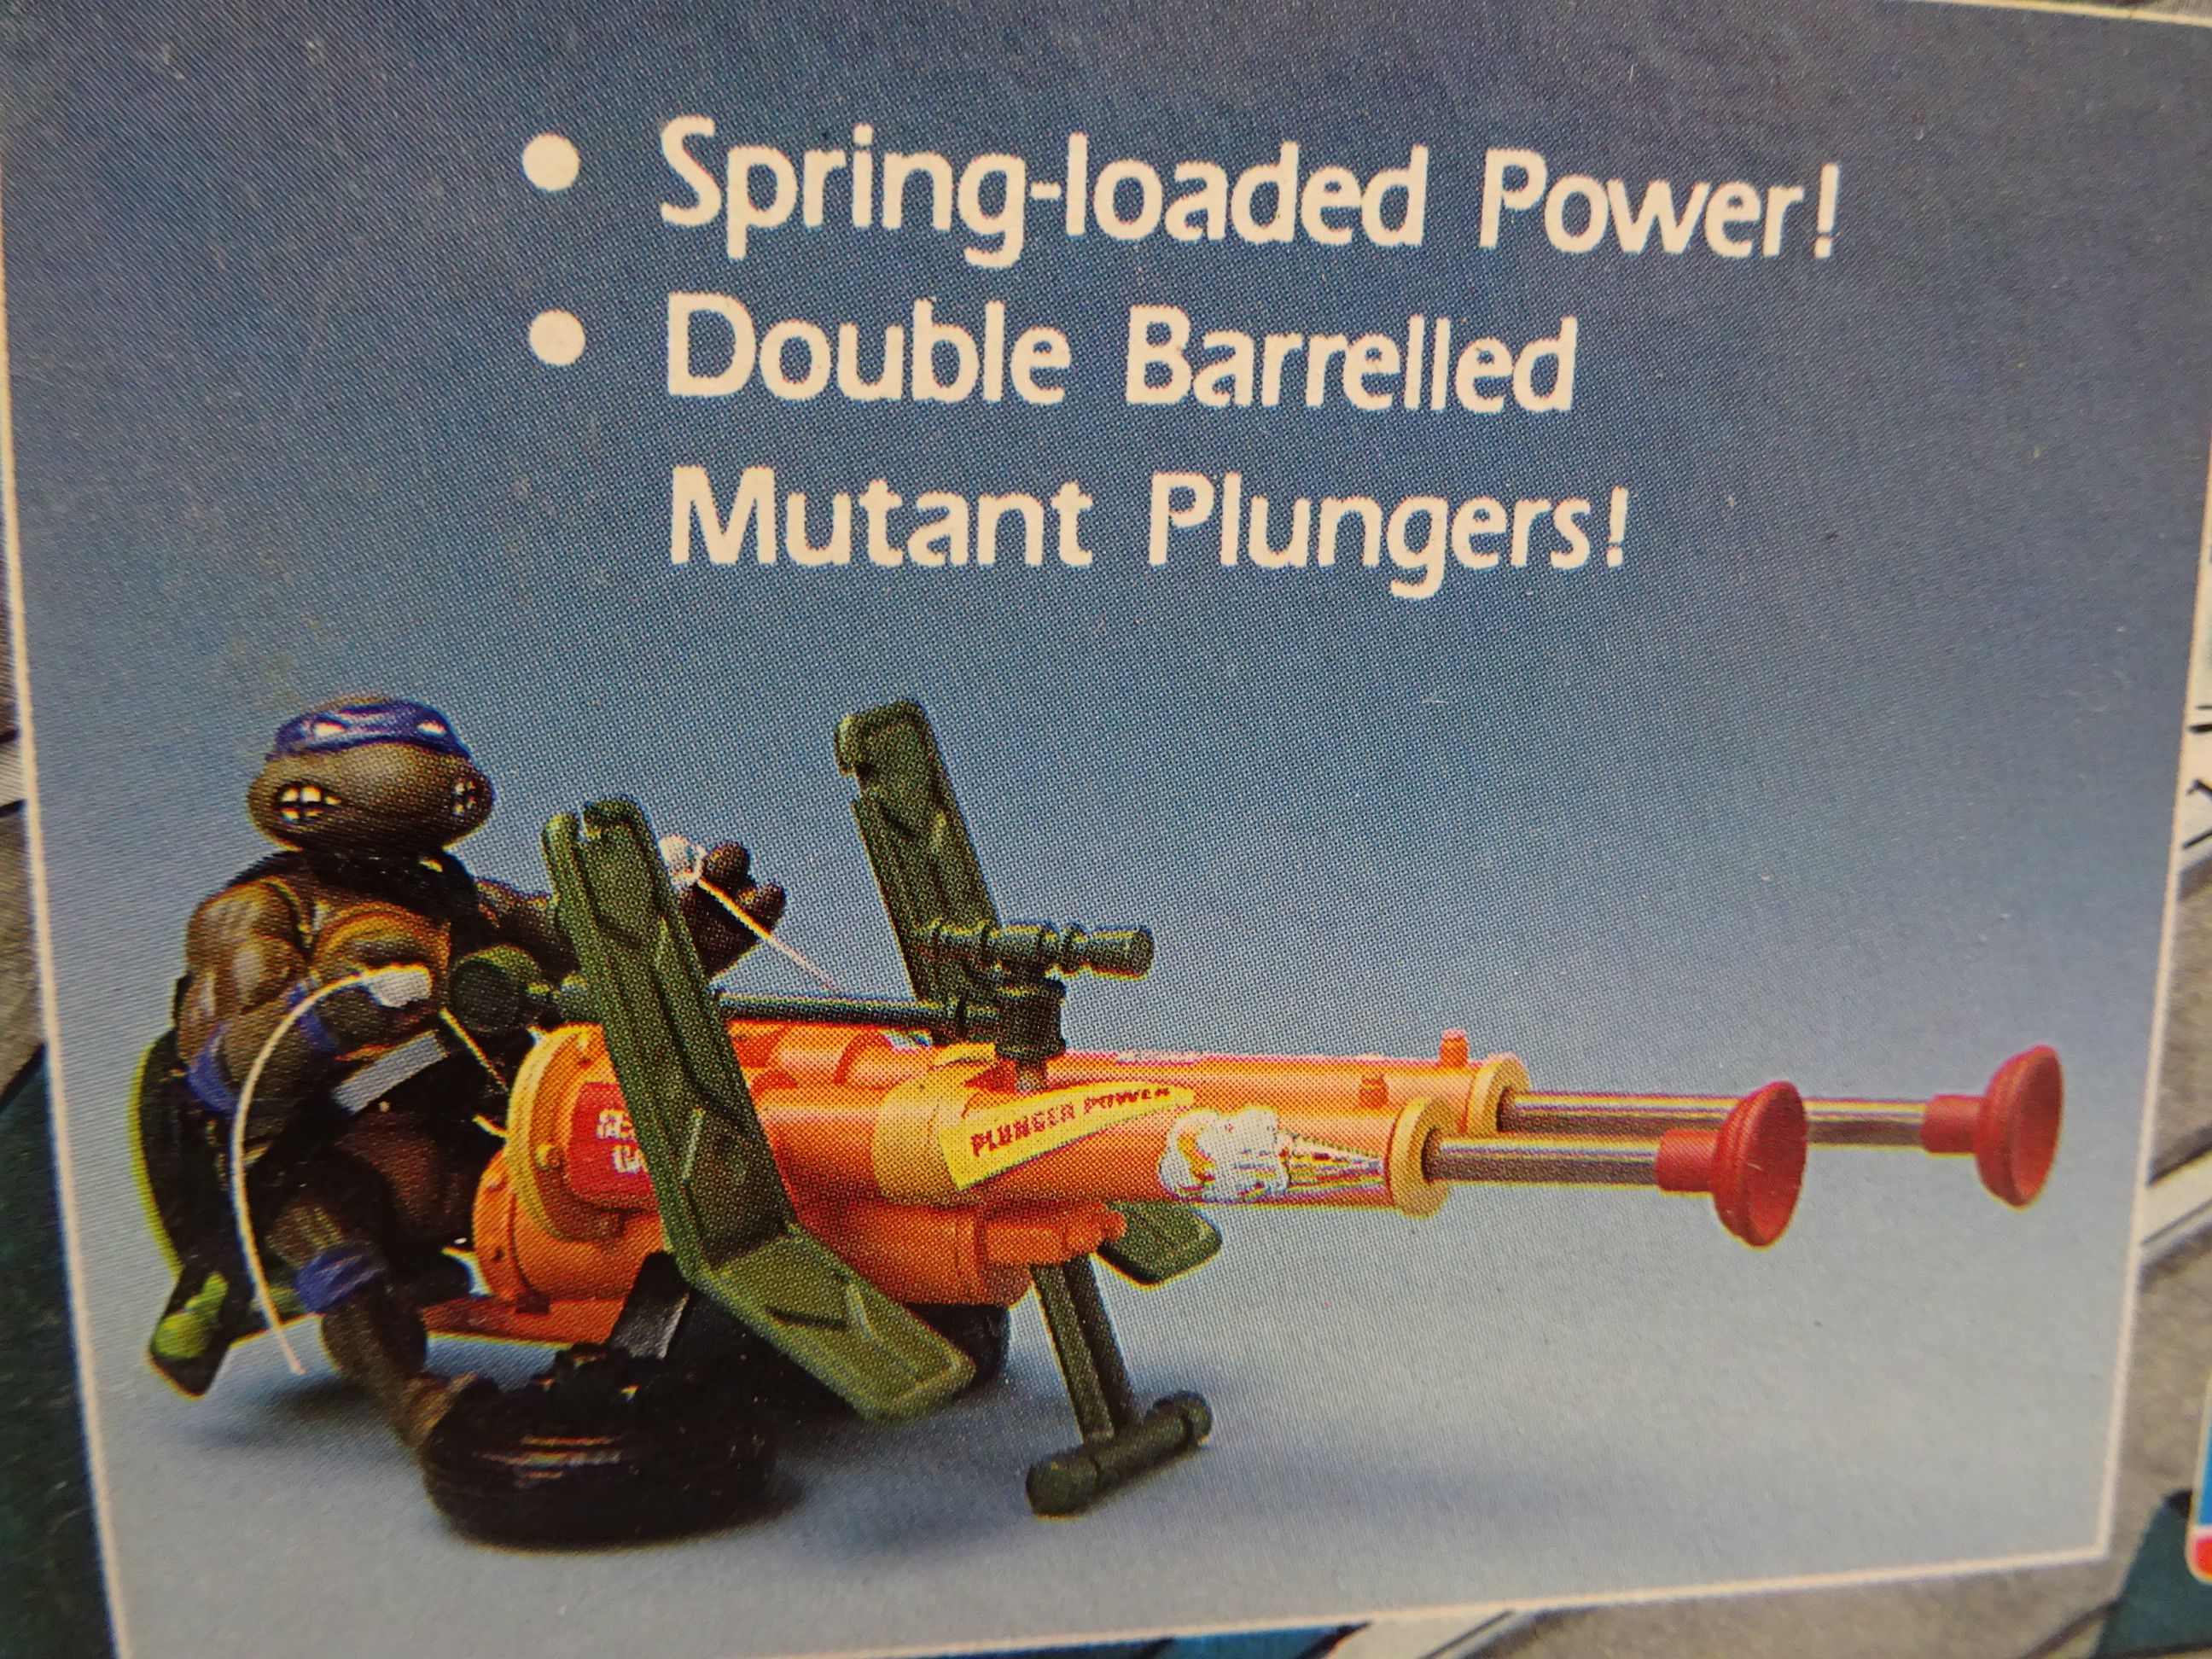 Original boxed Playmates Bandia Teenage Mutant Ninja Turtles Double Barrelled Plunger Gun, opened - Image 2 of 3